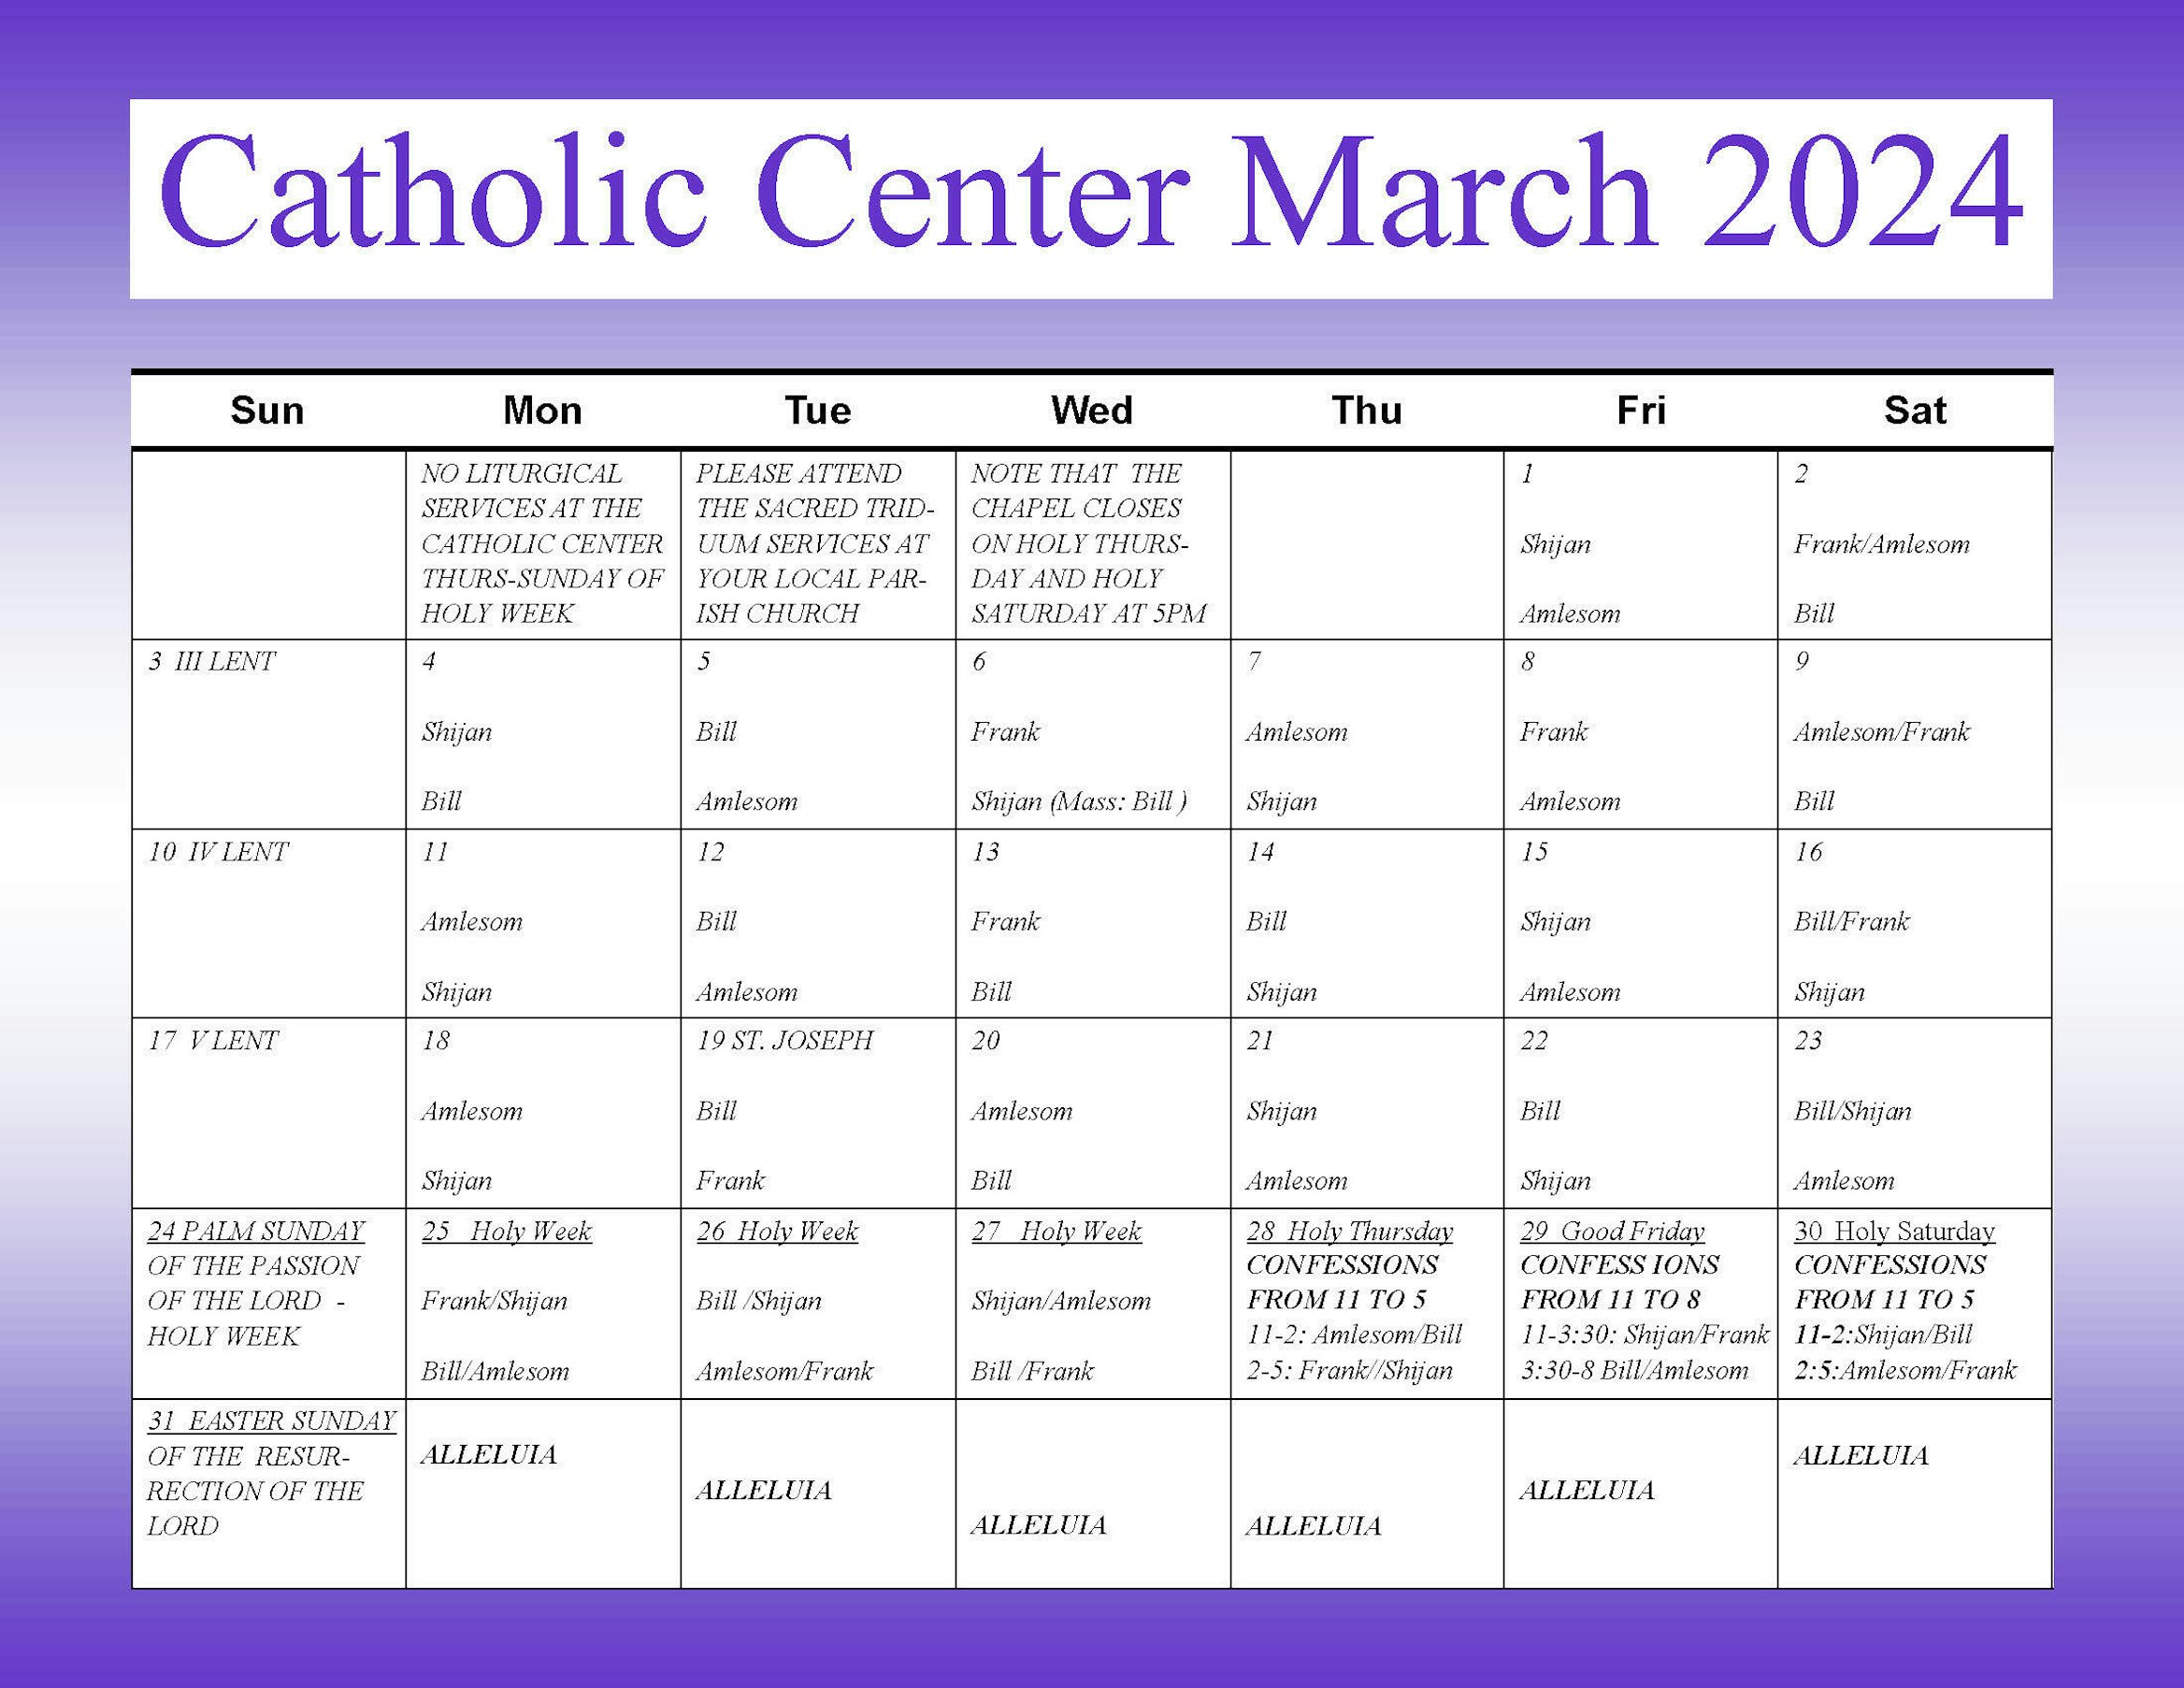 CATHOLIC CENTER MARCH 2024